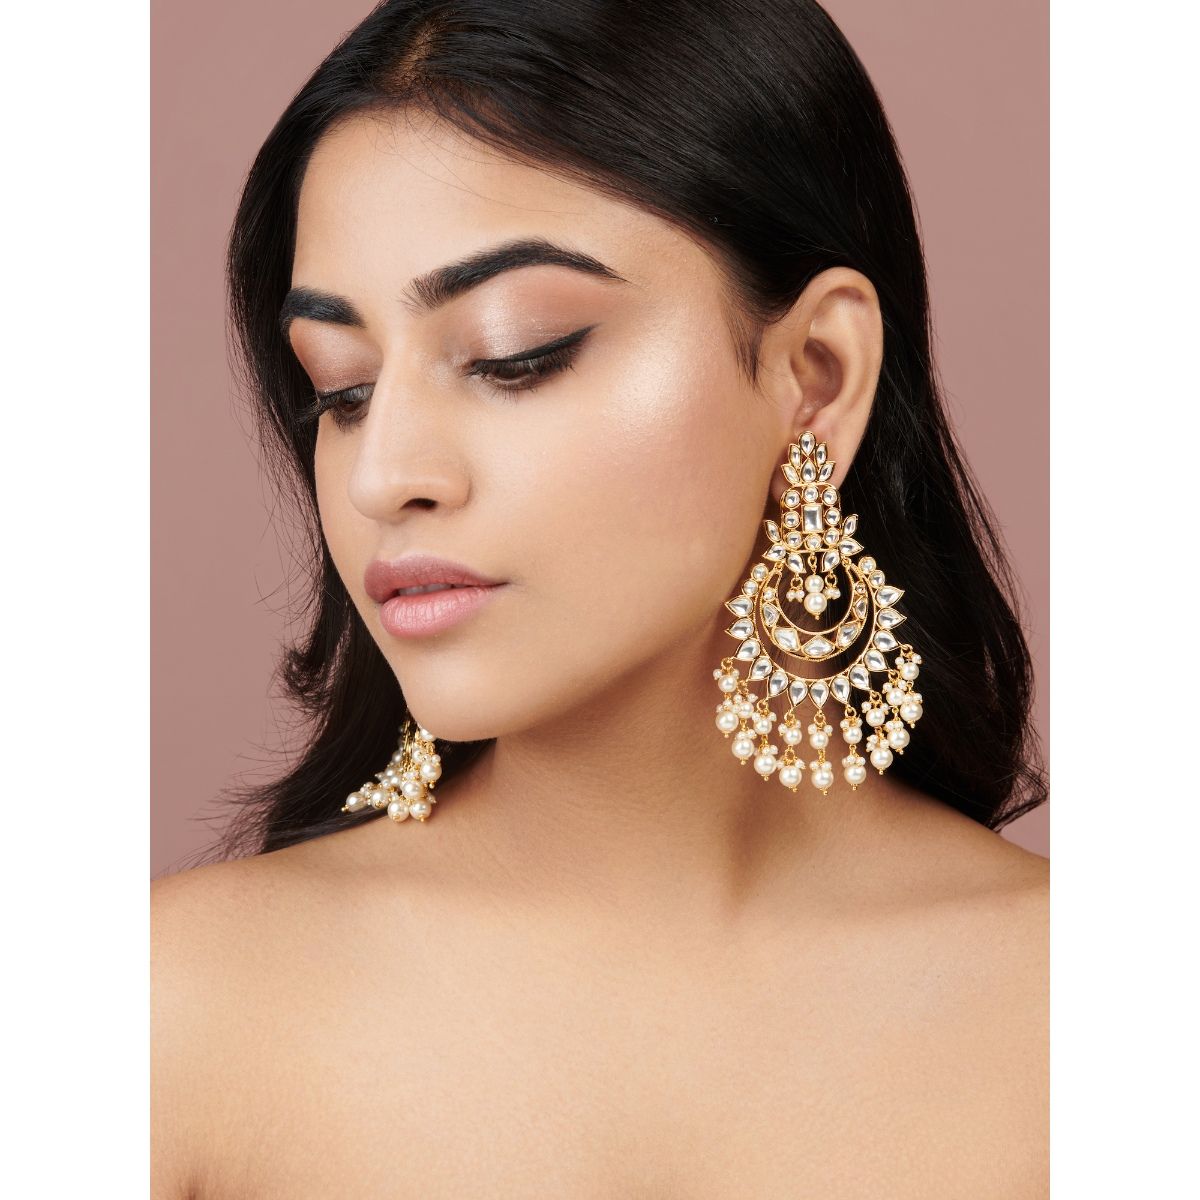 Flipkartcom  Buy Karatcart Oxidised Silver Embellished Kundan and Pearl Large  Chandbali Earrings for Women Alloy Chandbali Earring Online at Best Prices  in India